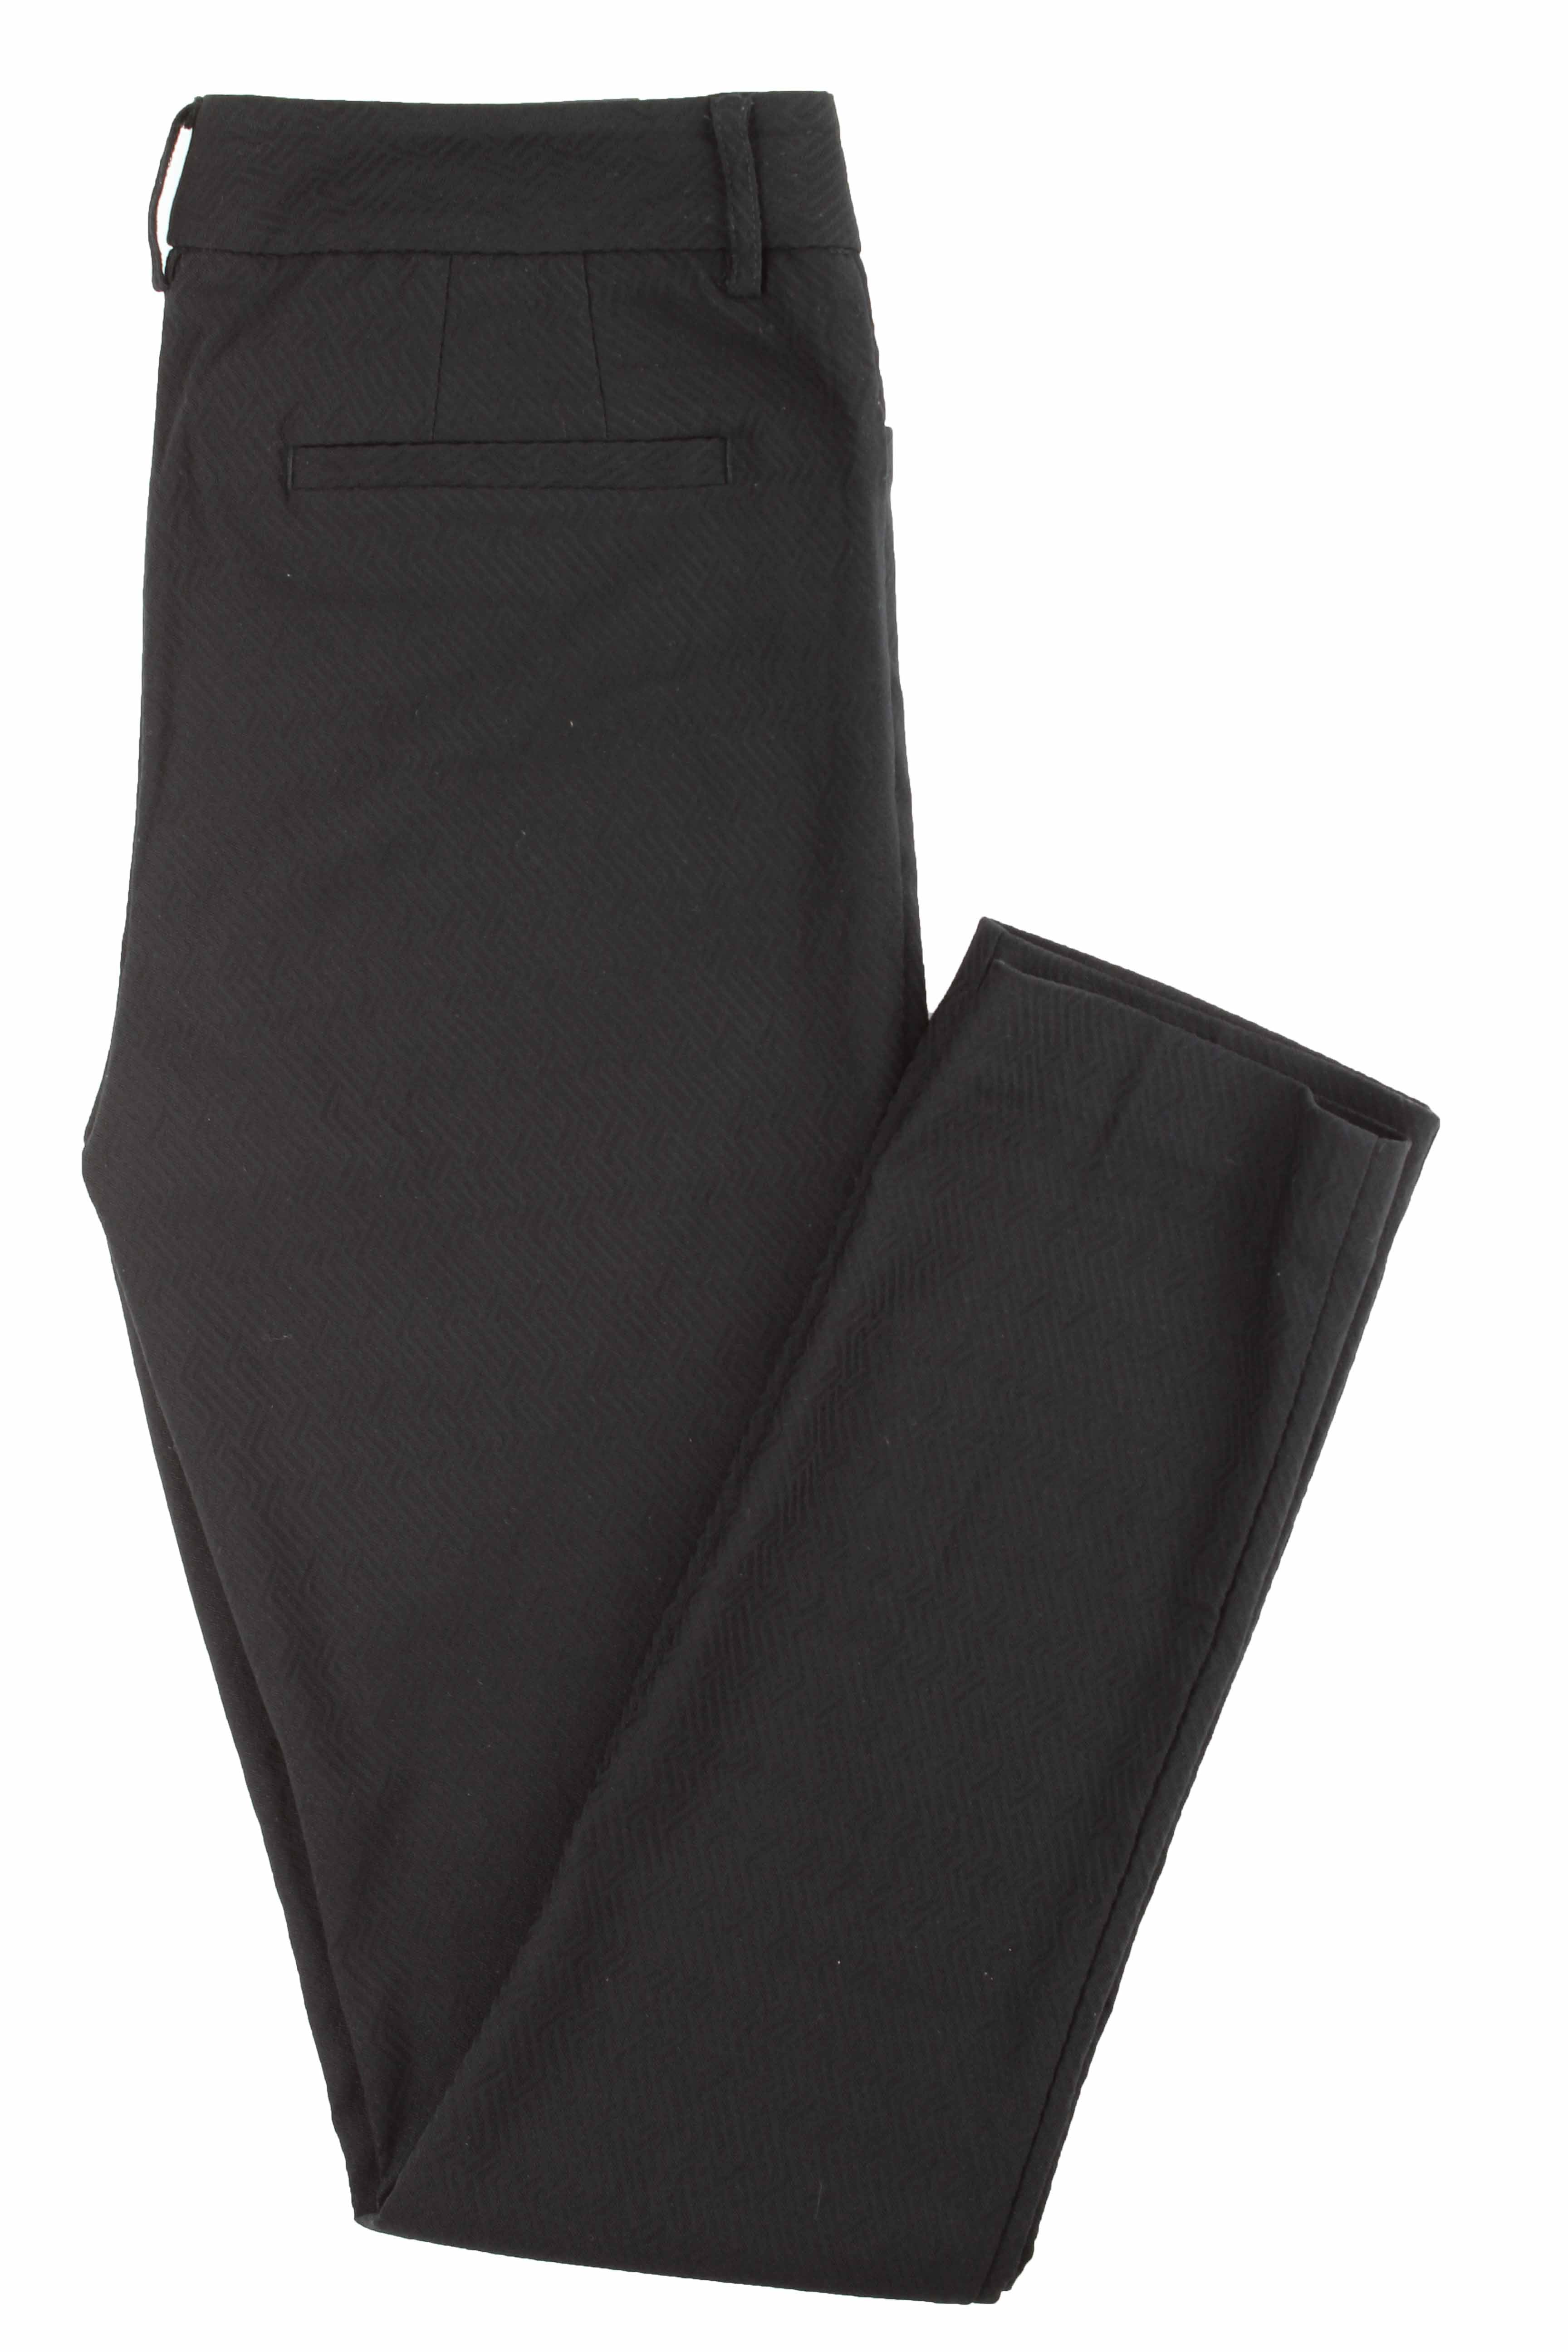 Mario Serrani Women's Slim Fit Pants Solid Black 